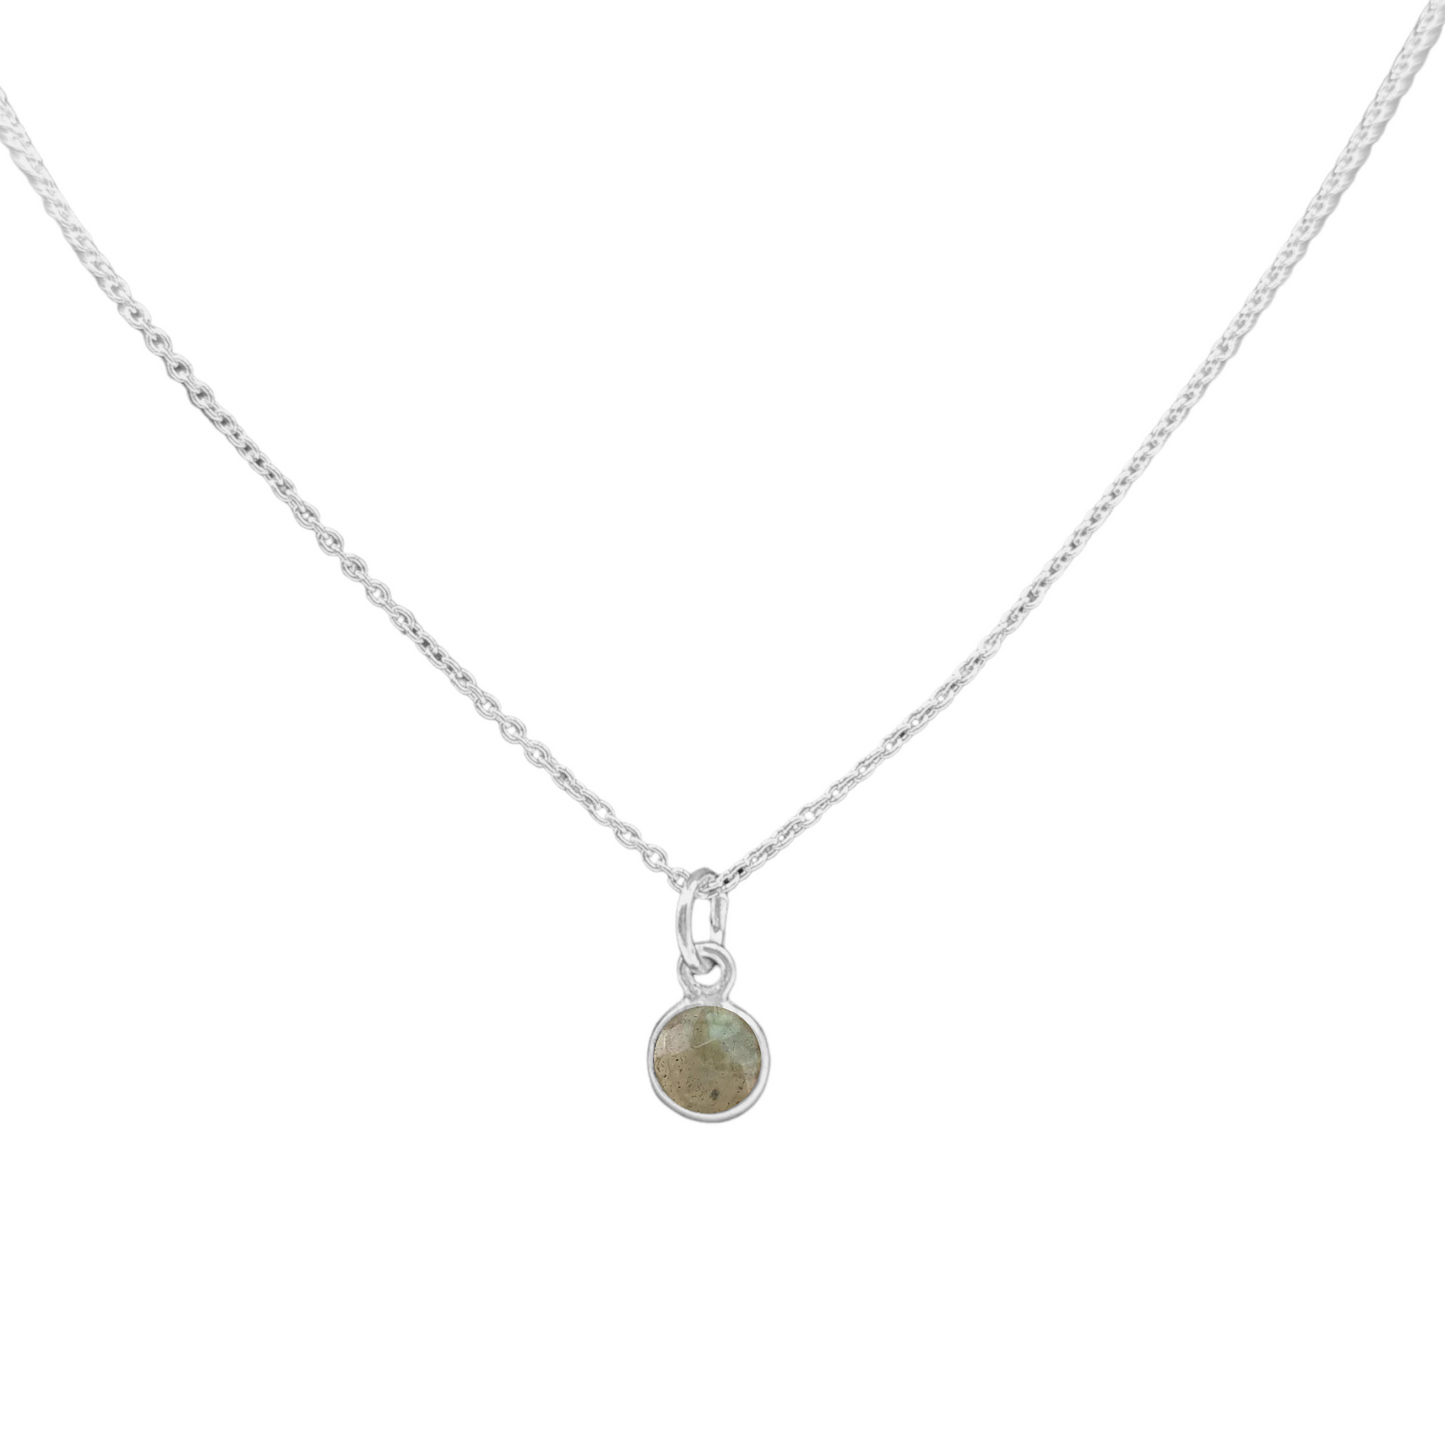 Silver birthstone necklace